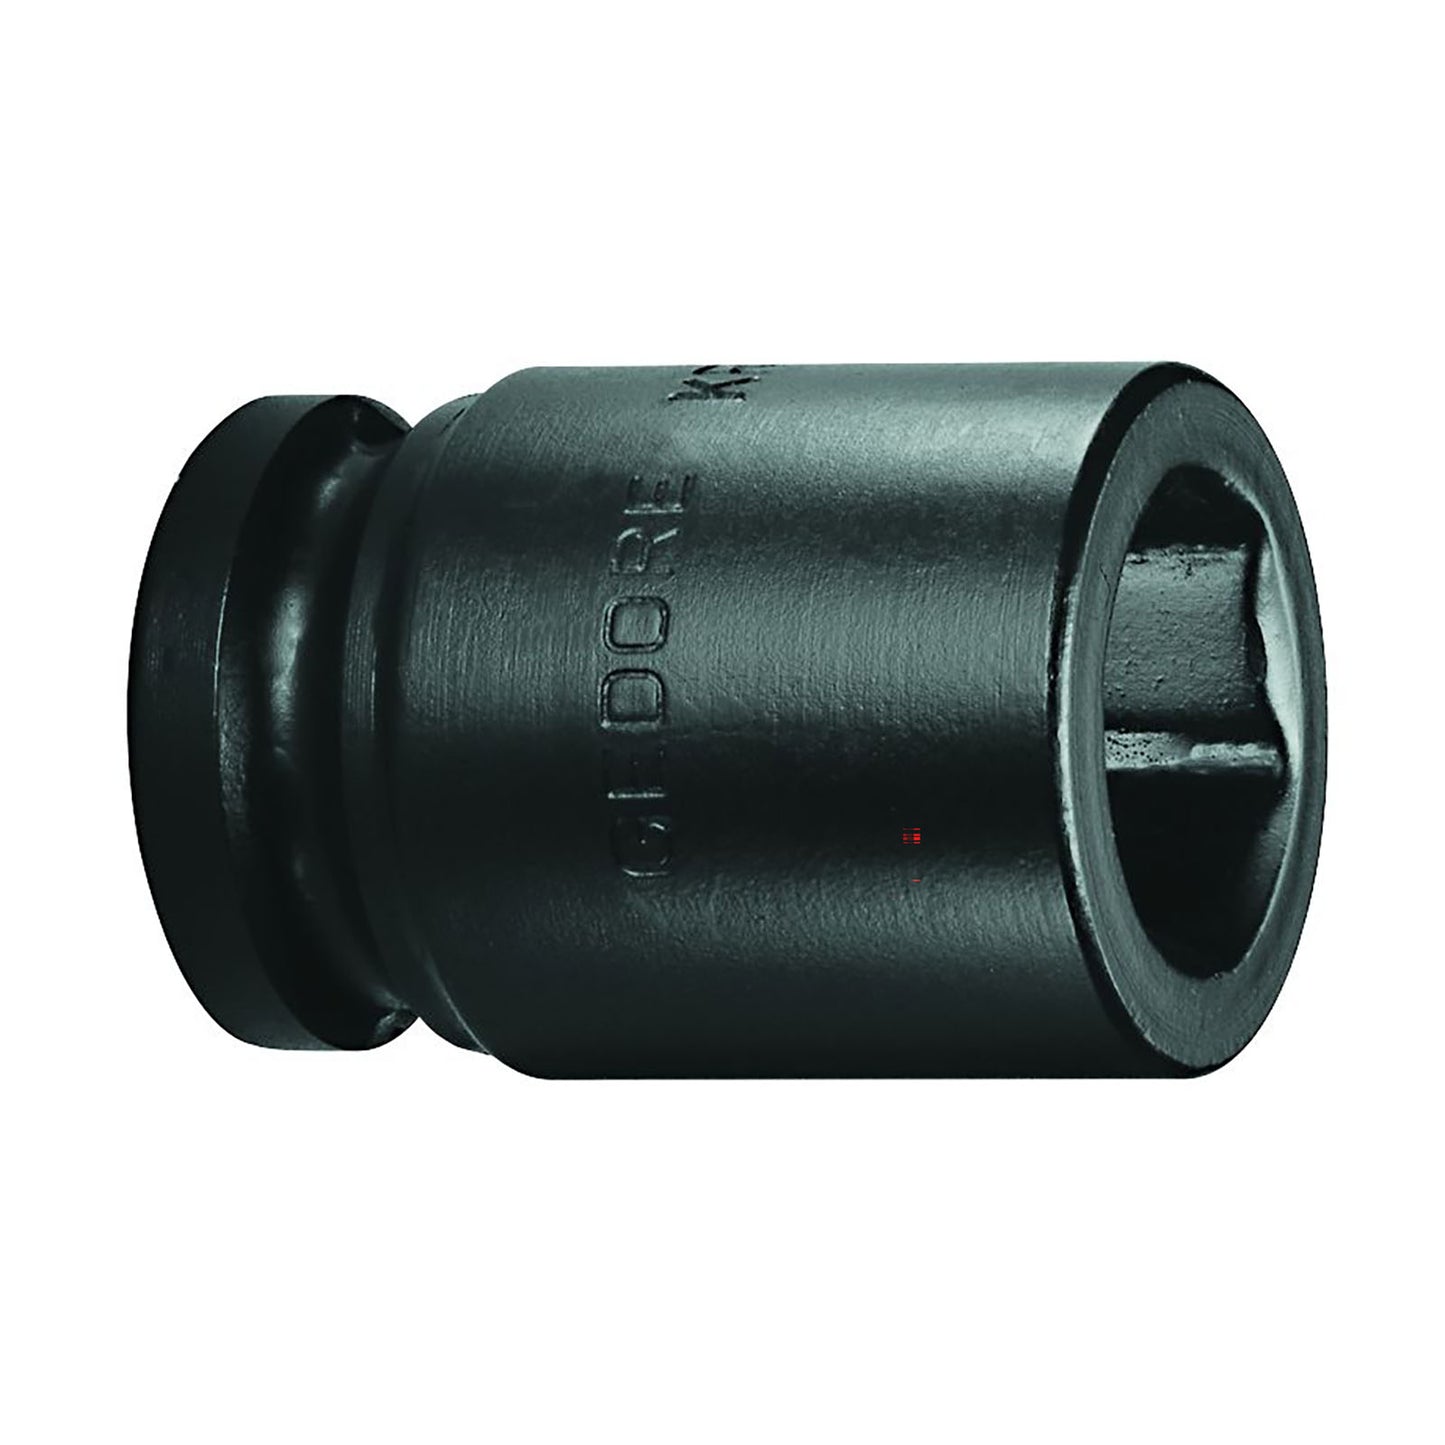 GEDORE KR 19 17 - Car Impact Socket 1/2" 17mm (6162490)